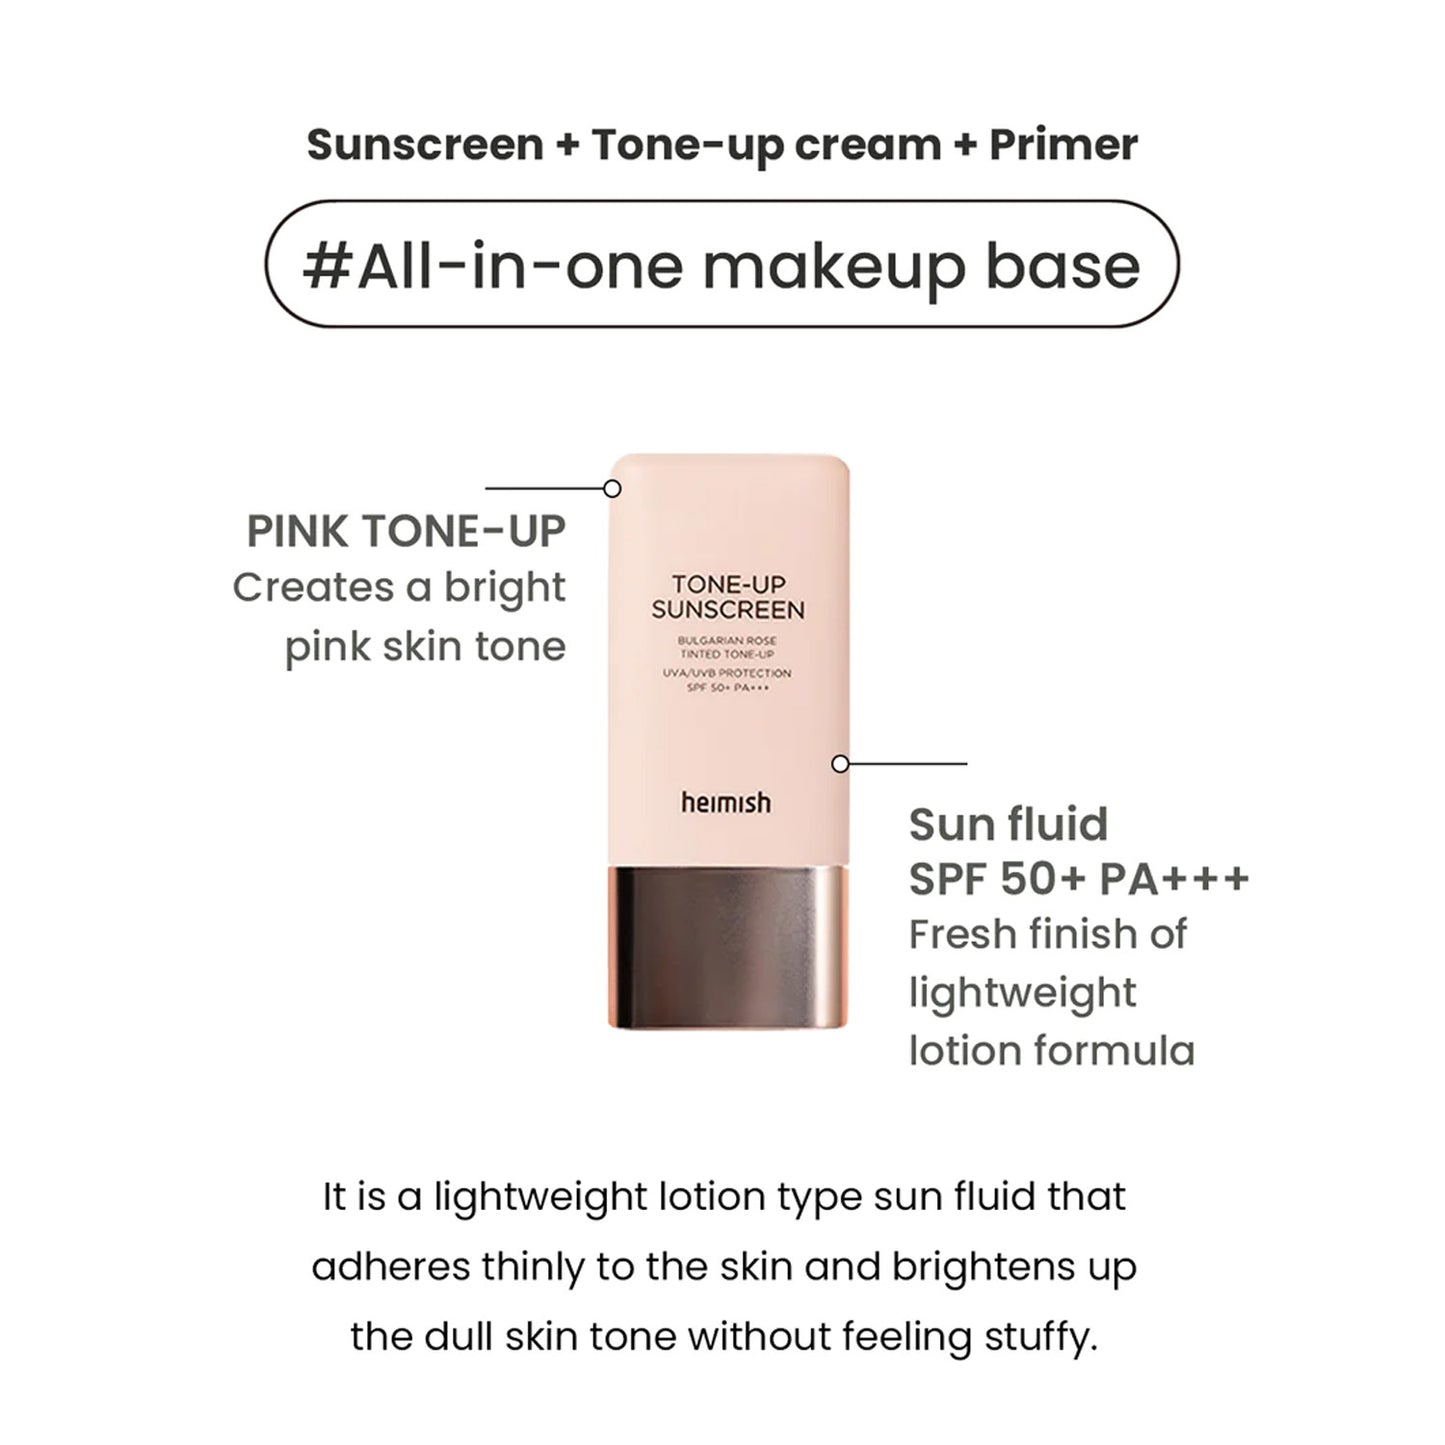 [Heimish] Bulgarian Rose Tinted Tone-up Sunscreen SPF50+ PA+++ 30ml